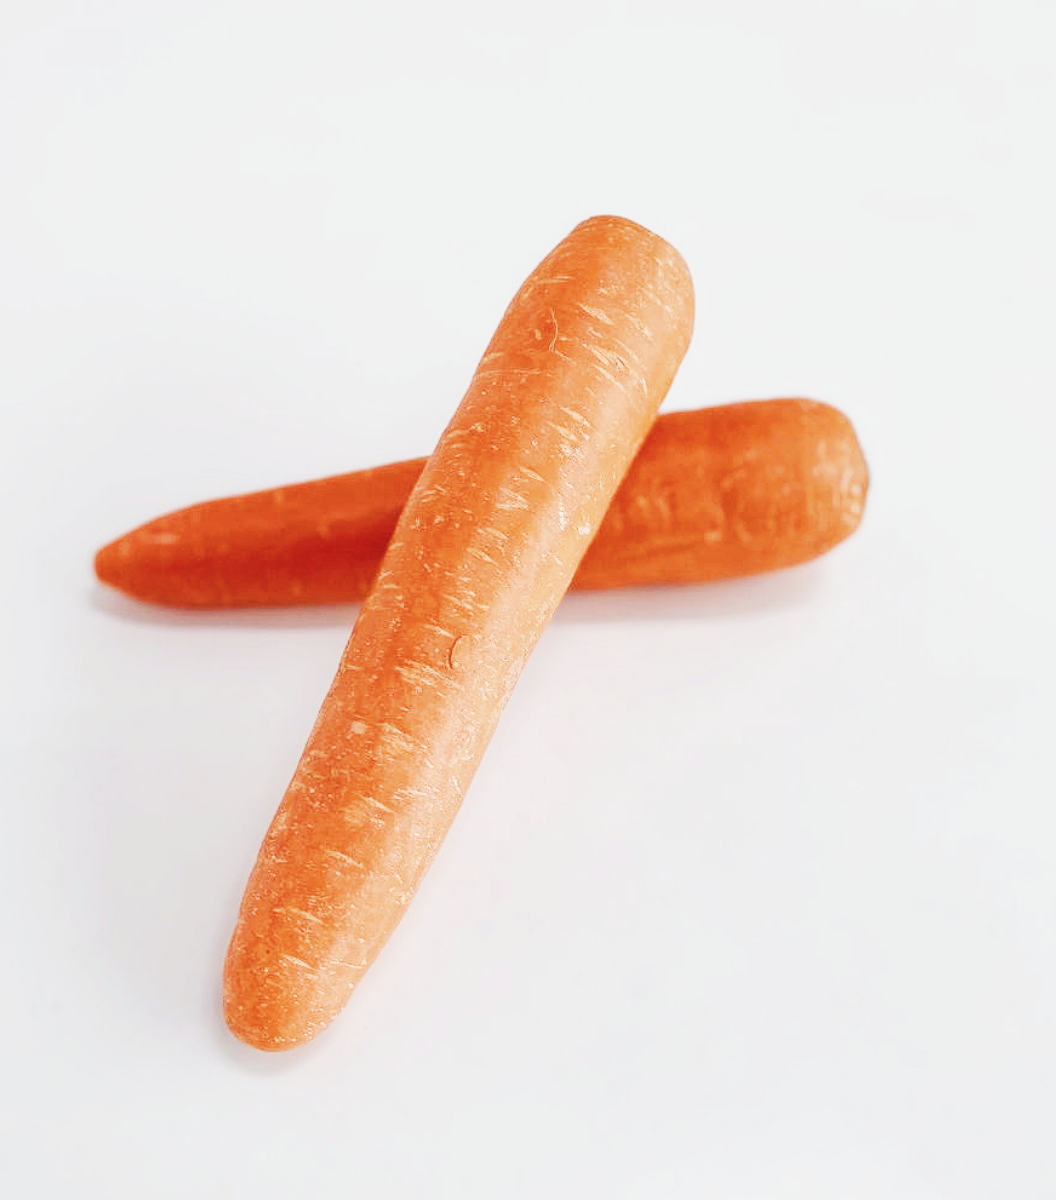 2 Sweet Juicy Fresh Carrots